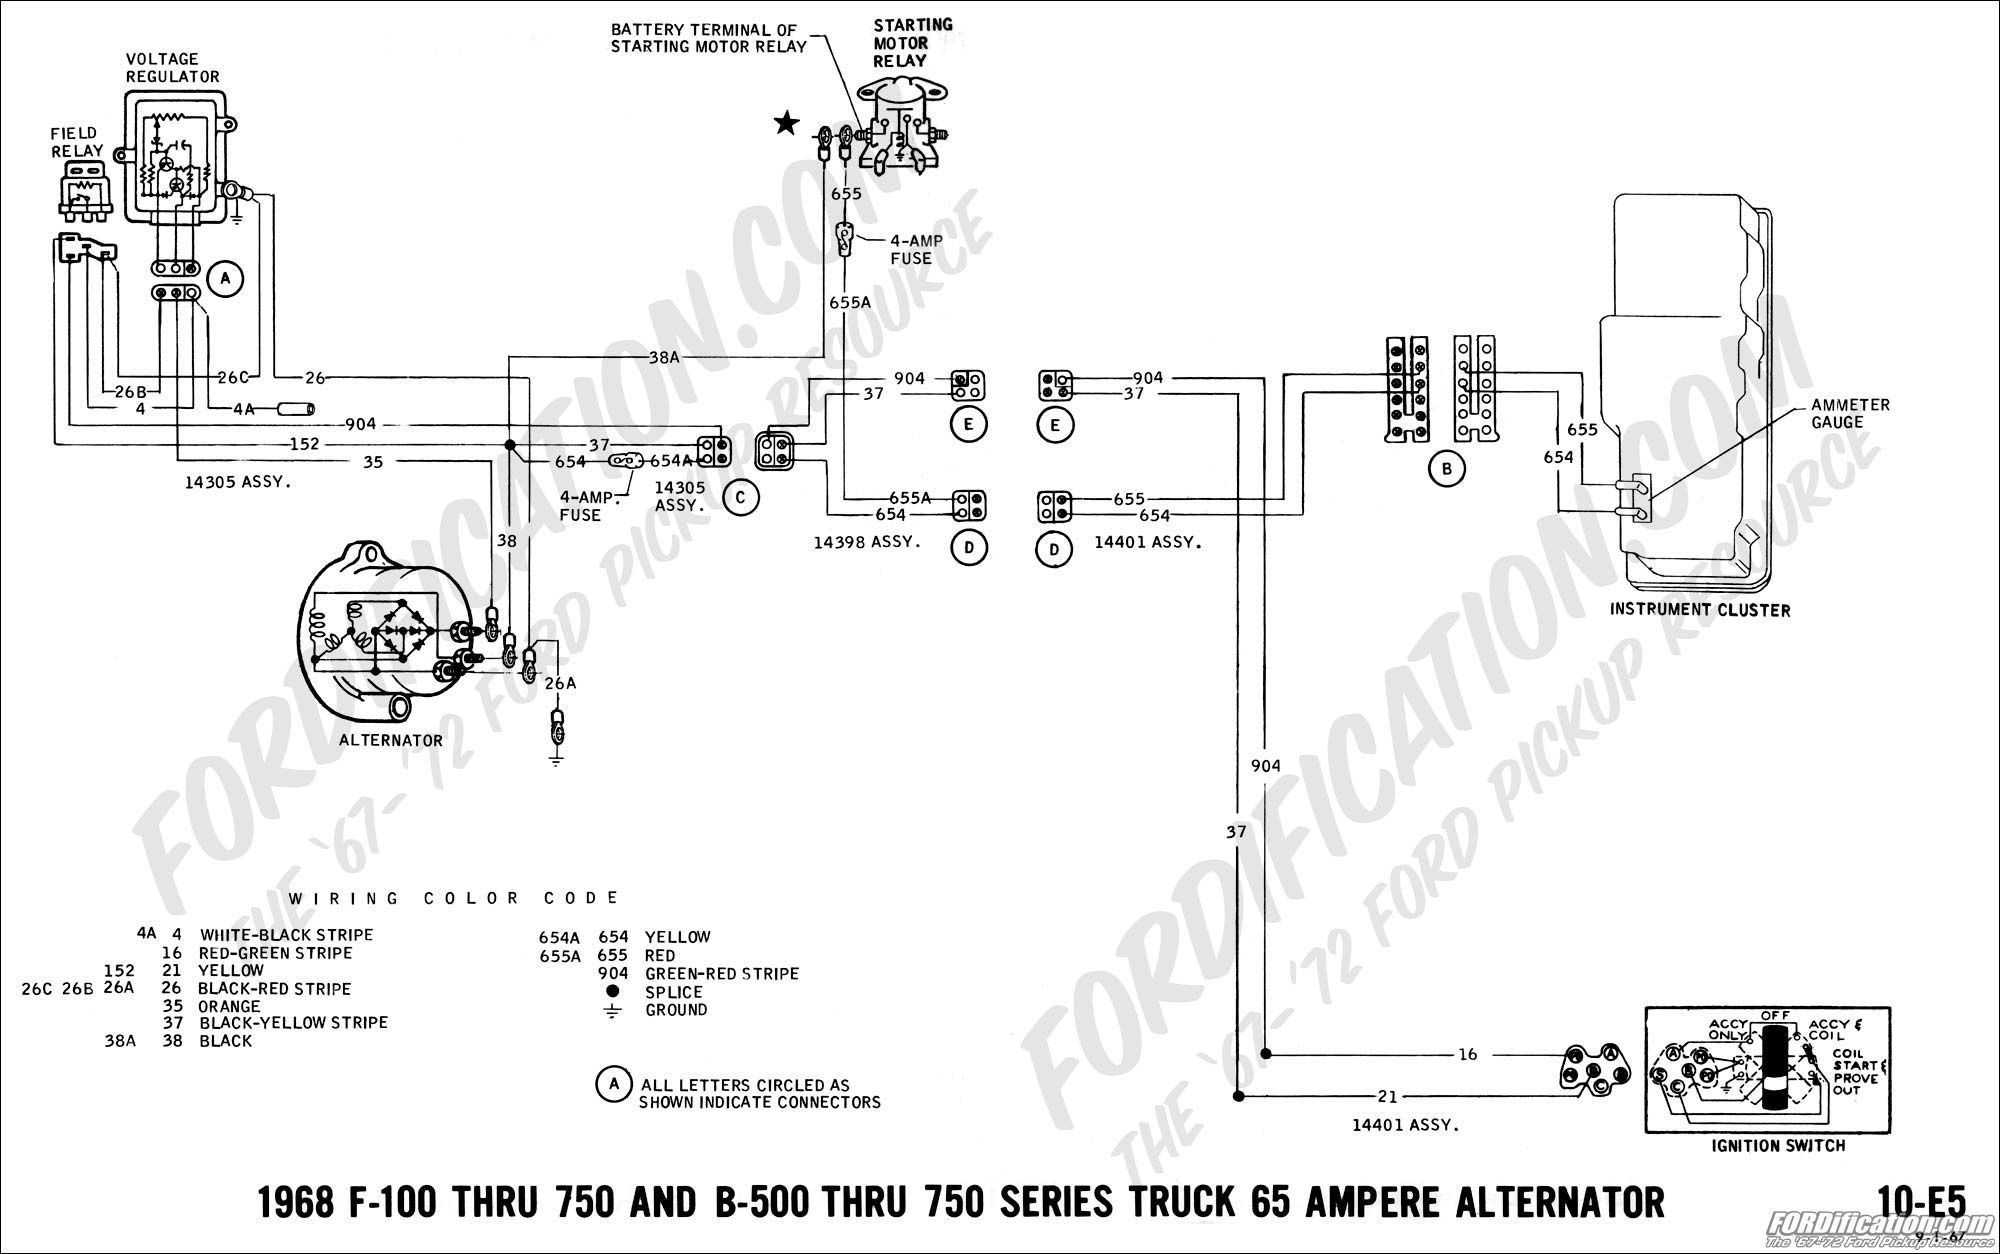 Wiring Diagram for Alternator with Internal Regulator New Tractor Alternator Wiring Diagram Best